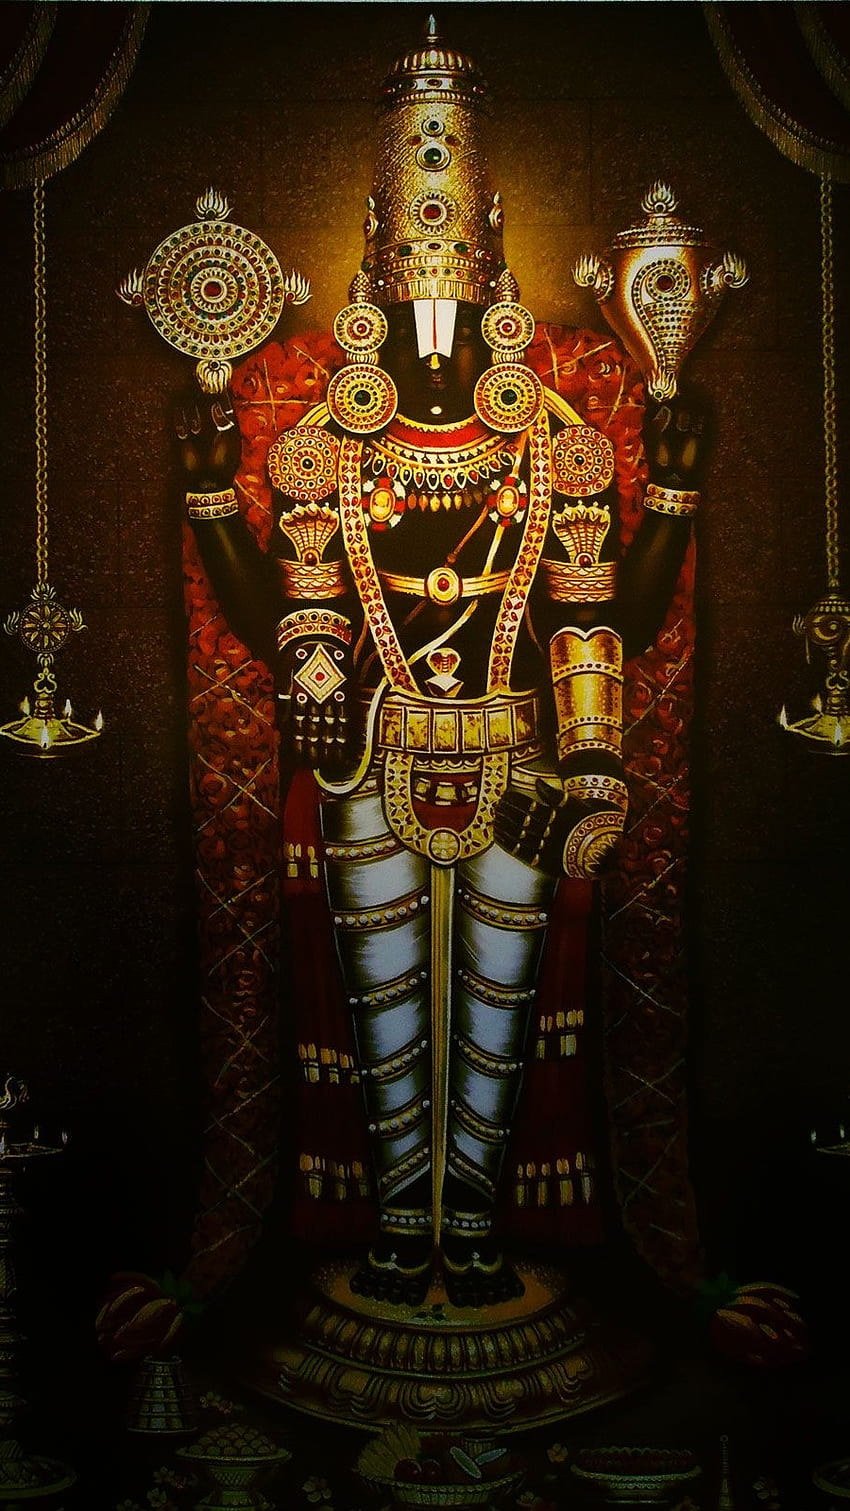 100+] Lord Balaji Wallpapers | Wallpapers.com